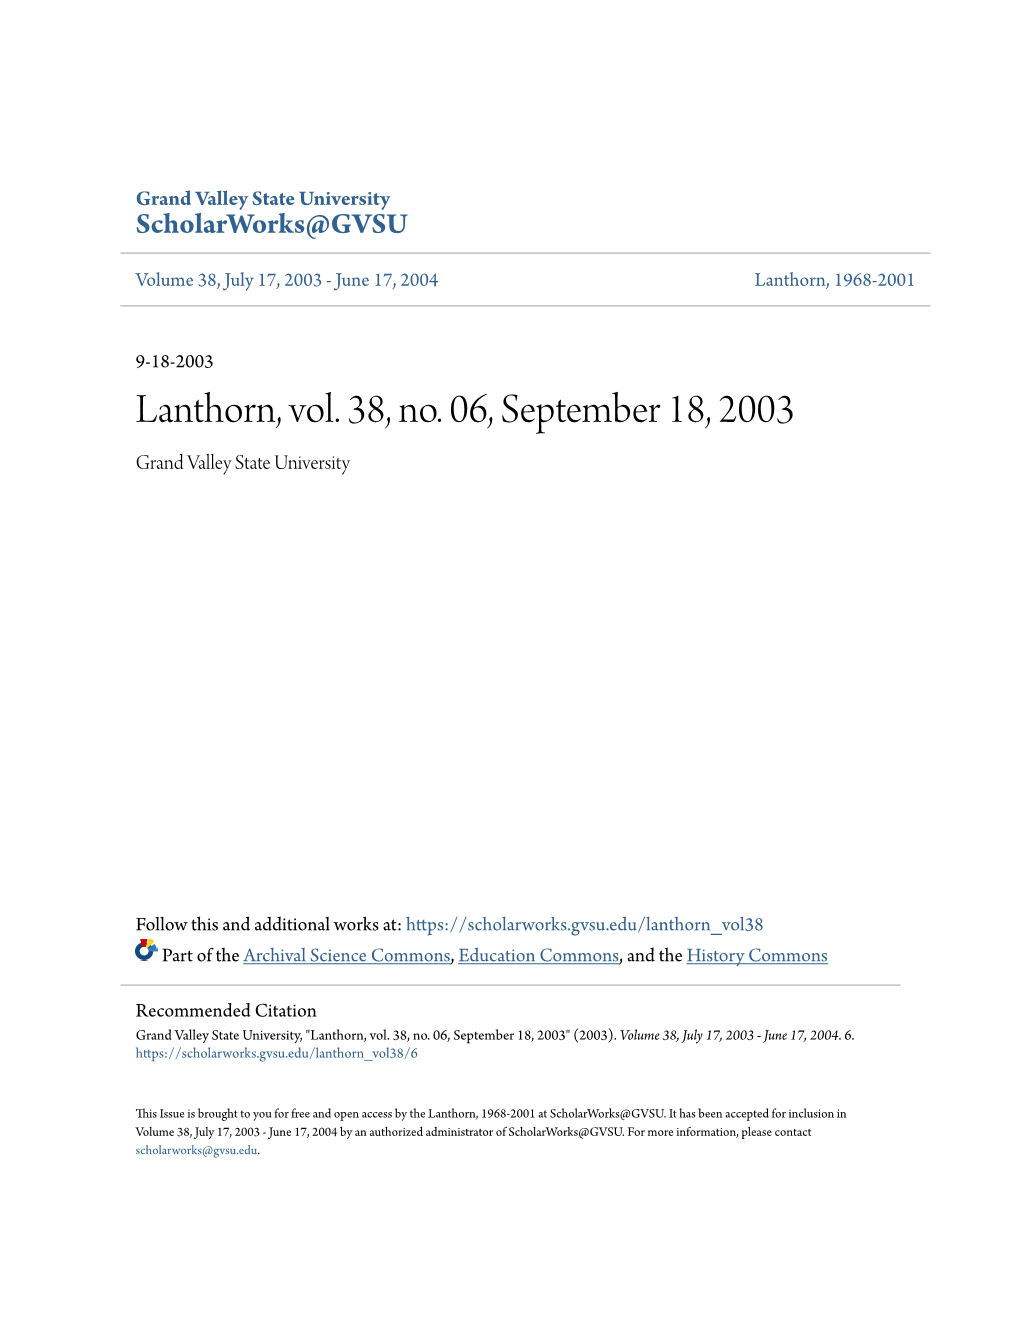 Lanthorn, Vol. 38, No. 06, September 18, 2003 Grand Valley State University